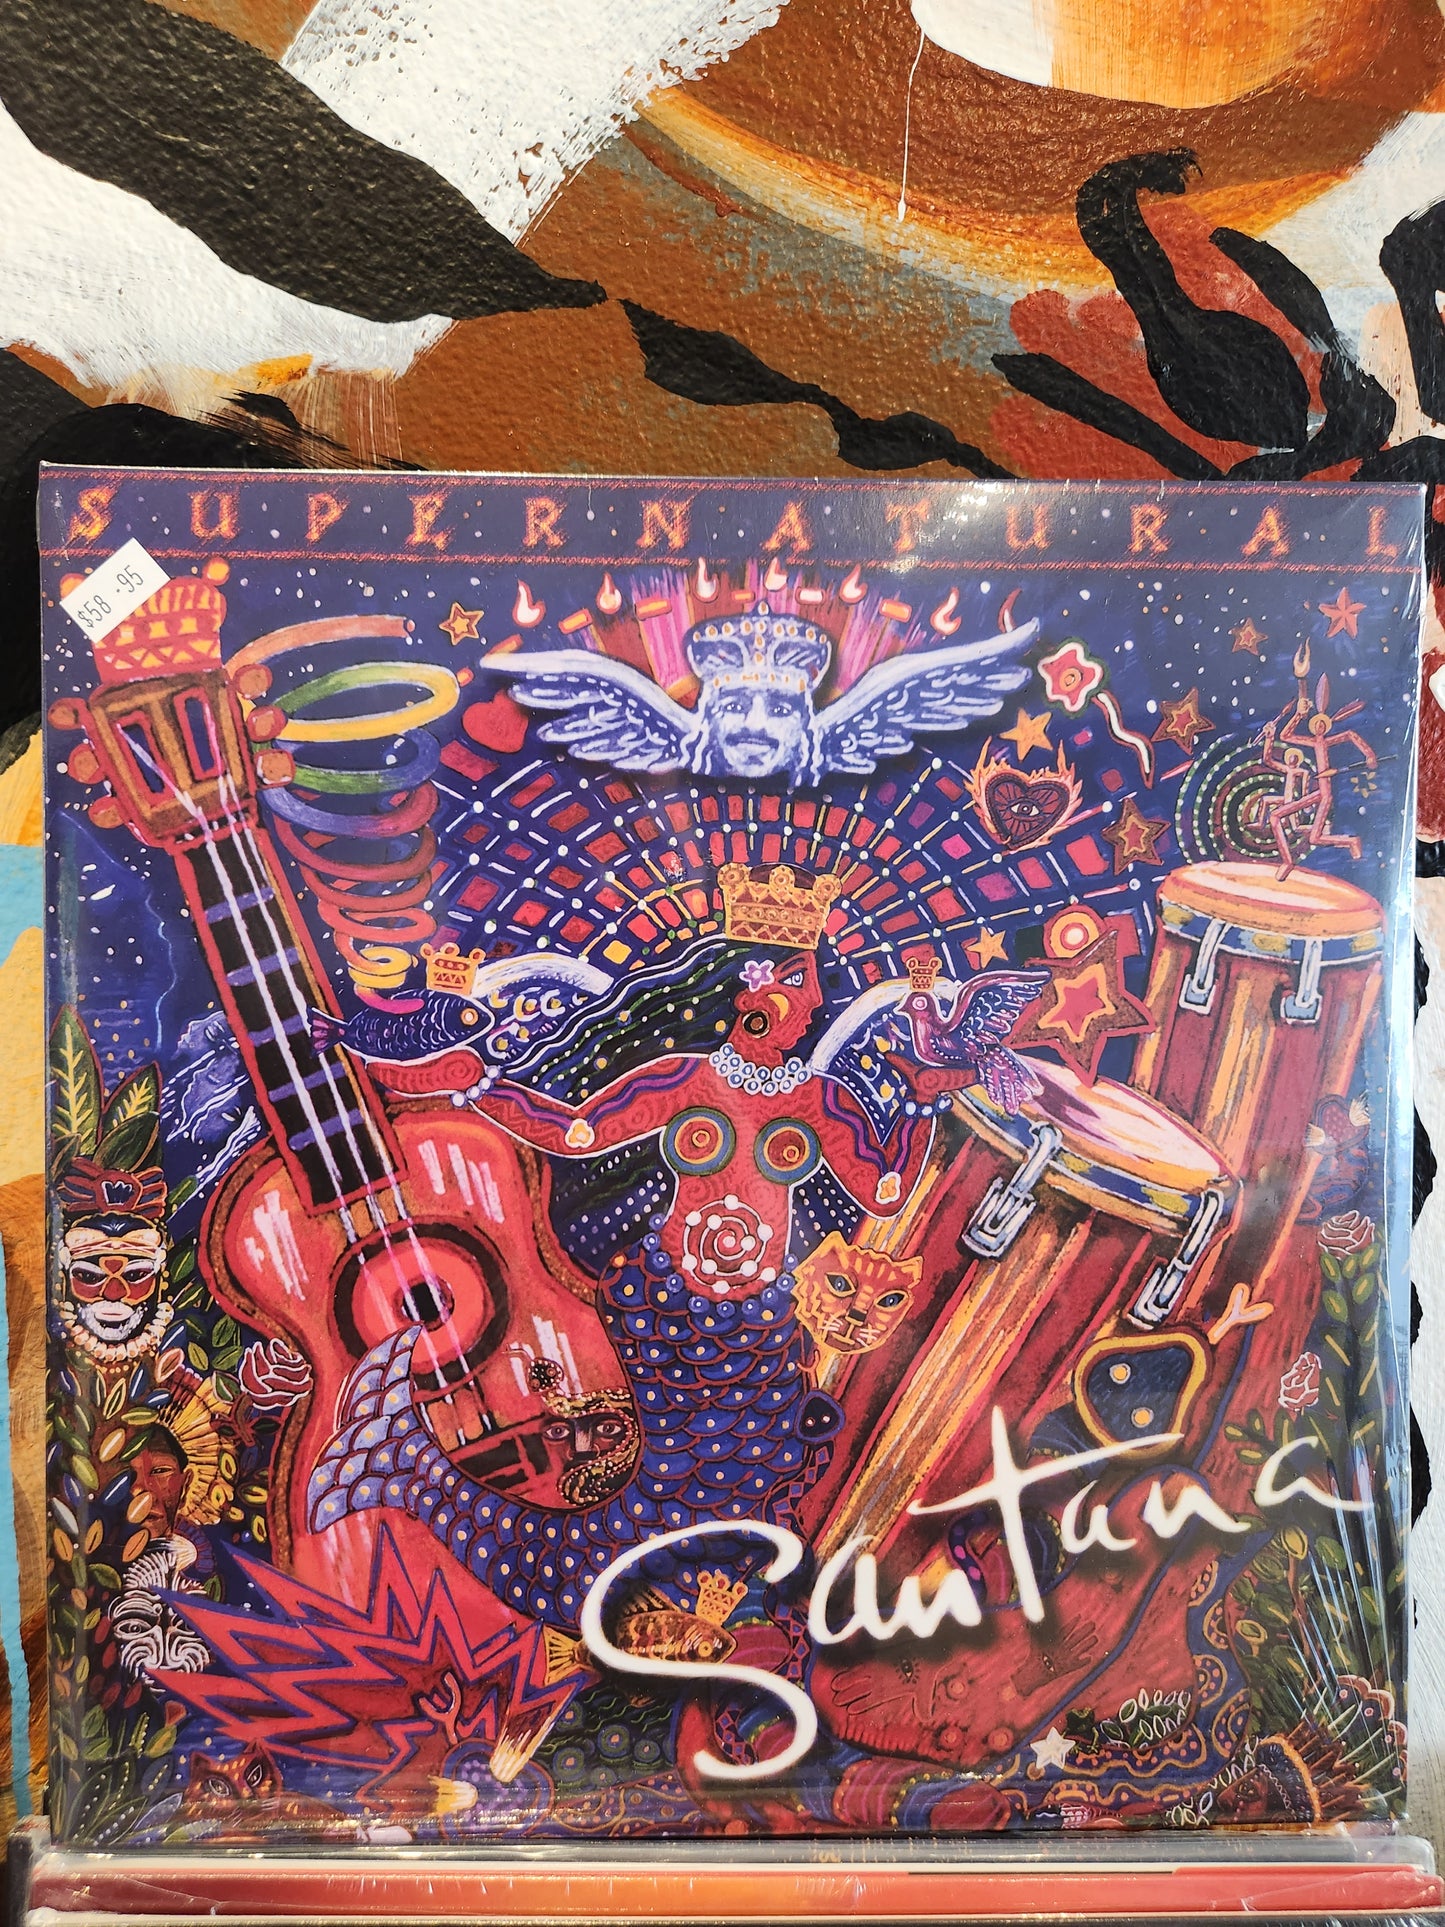 Santana - Supernatural - Vinyl LP